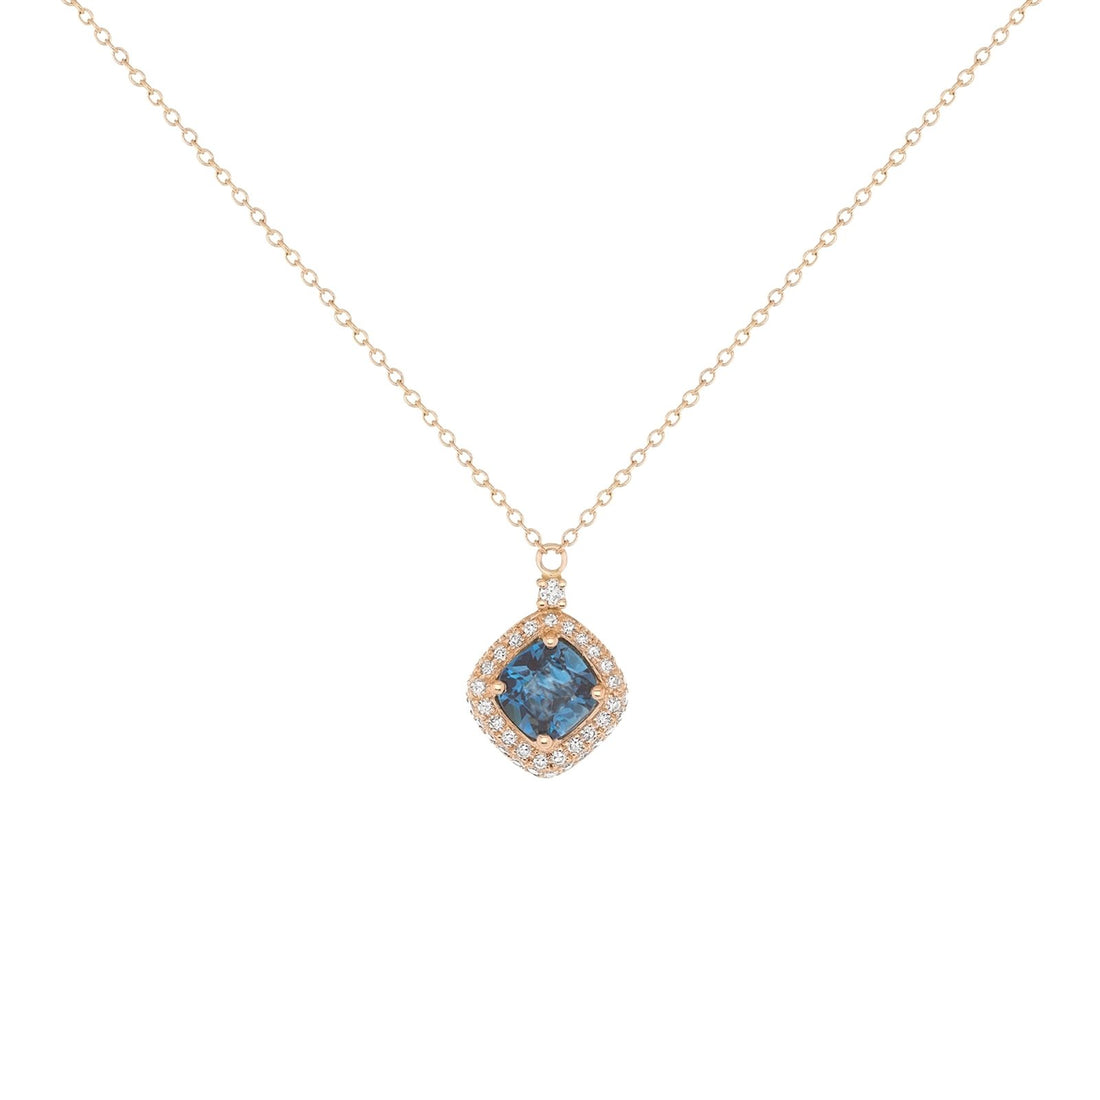 Something Blue - Ele Keats Jewelry